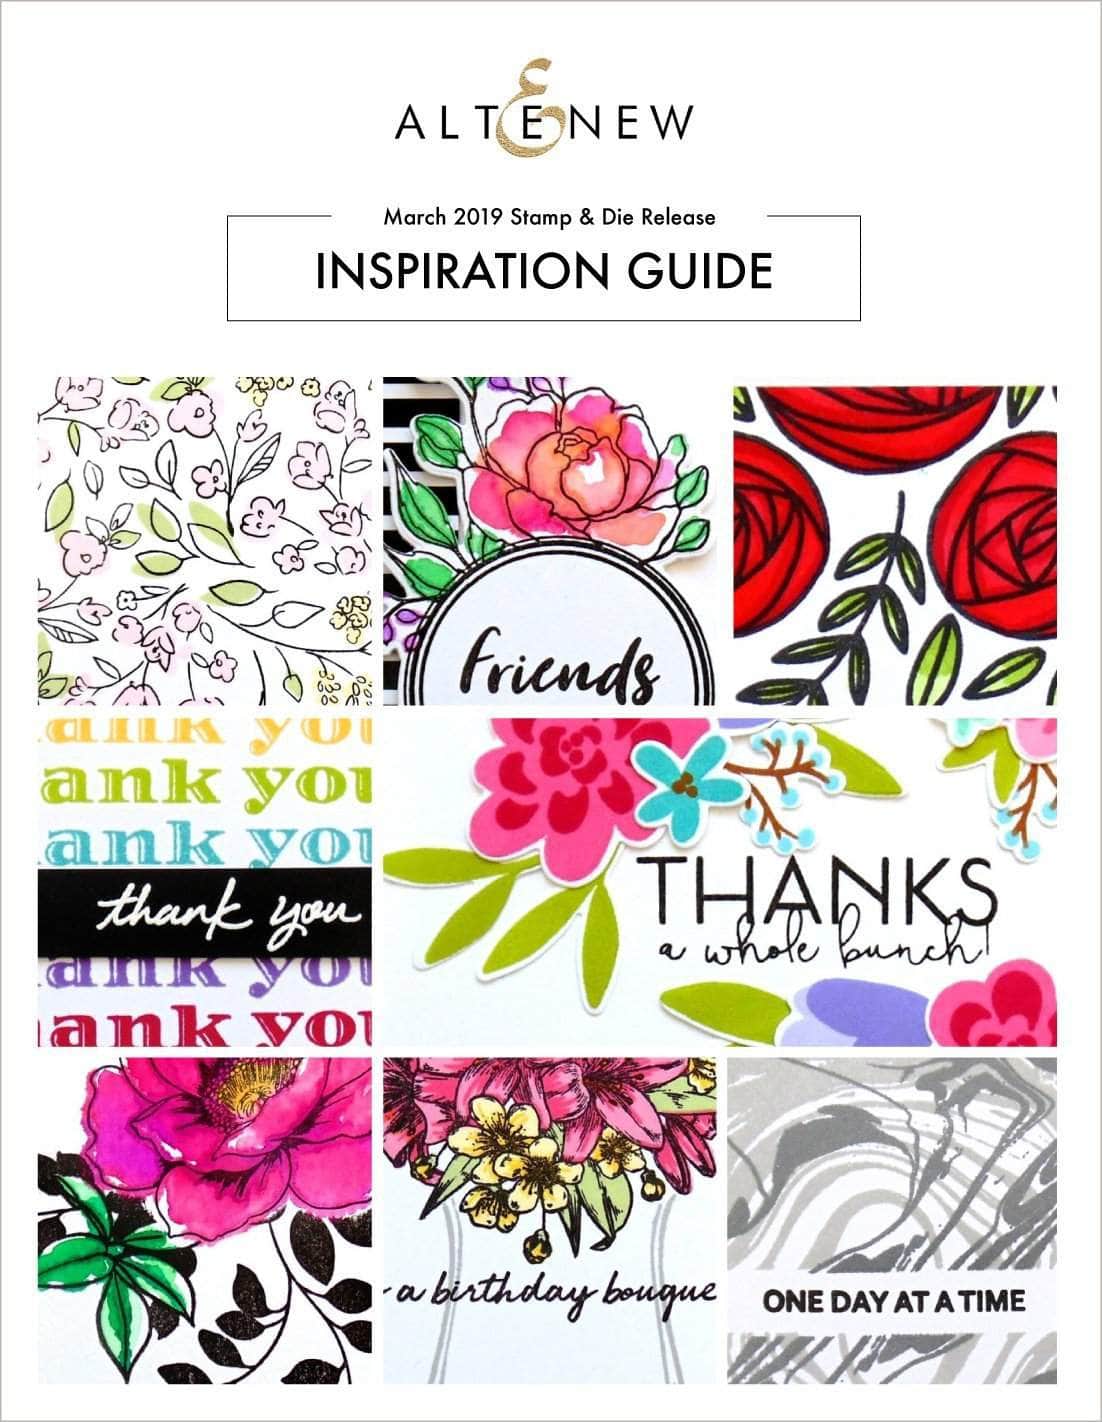 Printed Media Fond Appreciation Stamp & Die Release Inspiration Guide